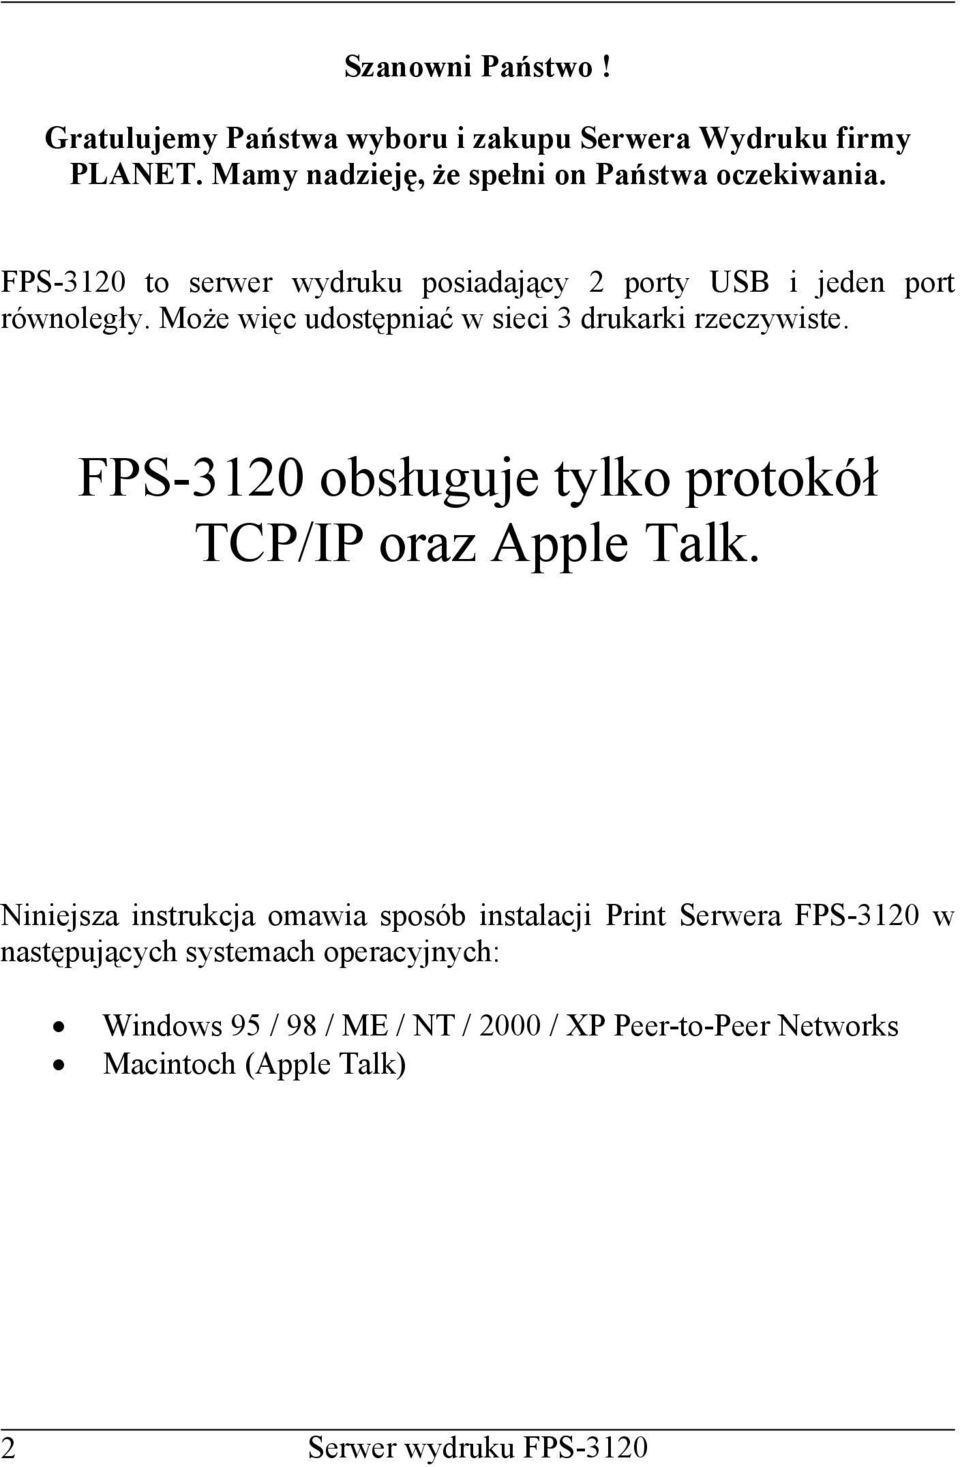 FPS-3120 obsługuje tylko protokół TCP/IP oraz Apple Talk.